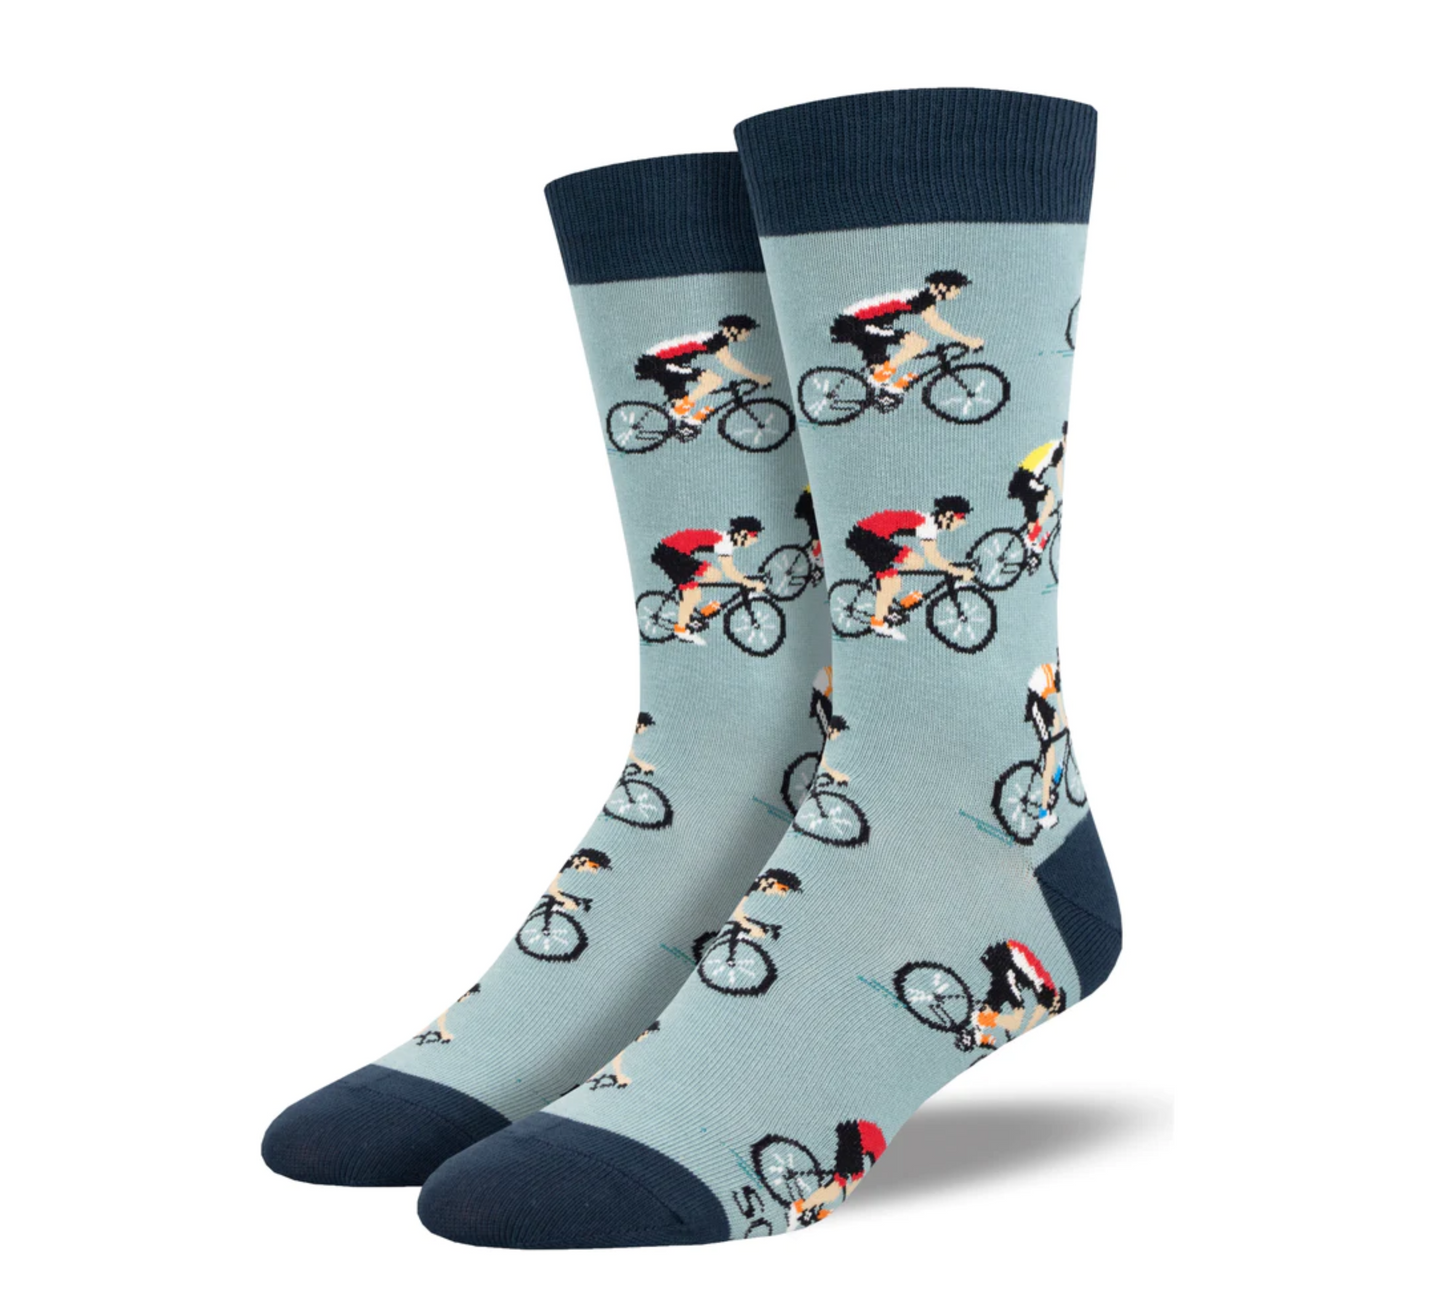 Socksmith Cycling Crew Socks - - WebsiteProductphotos_e9a0477d-c789-4c08-9ca1-fffa27879171